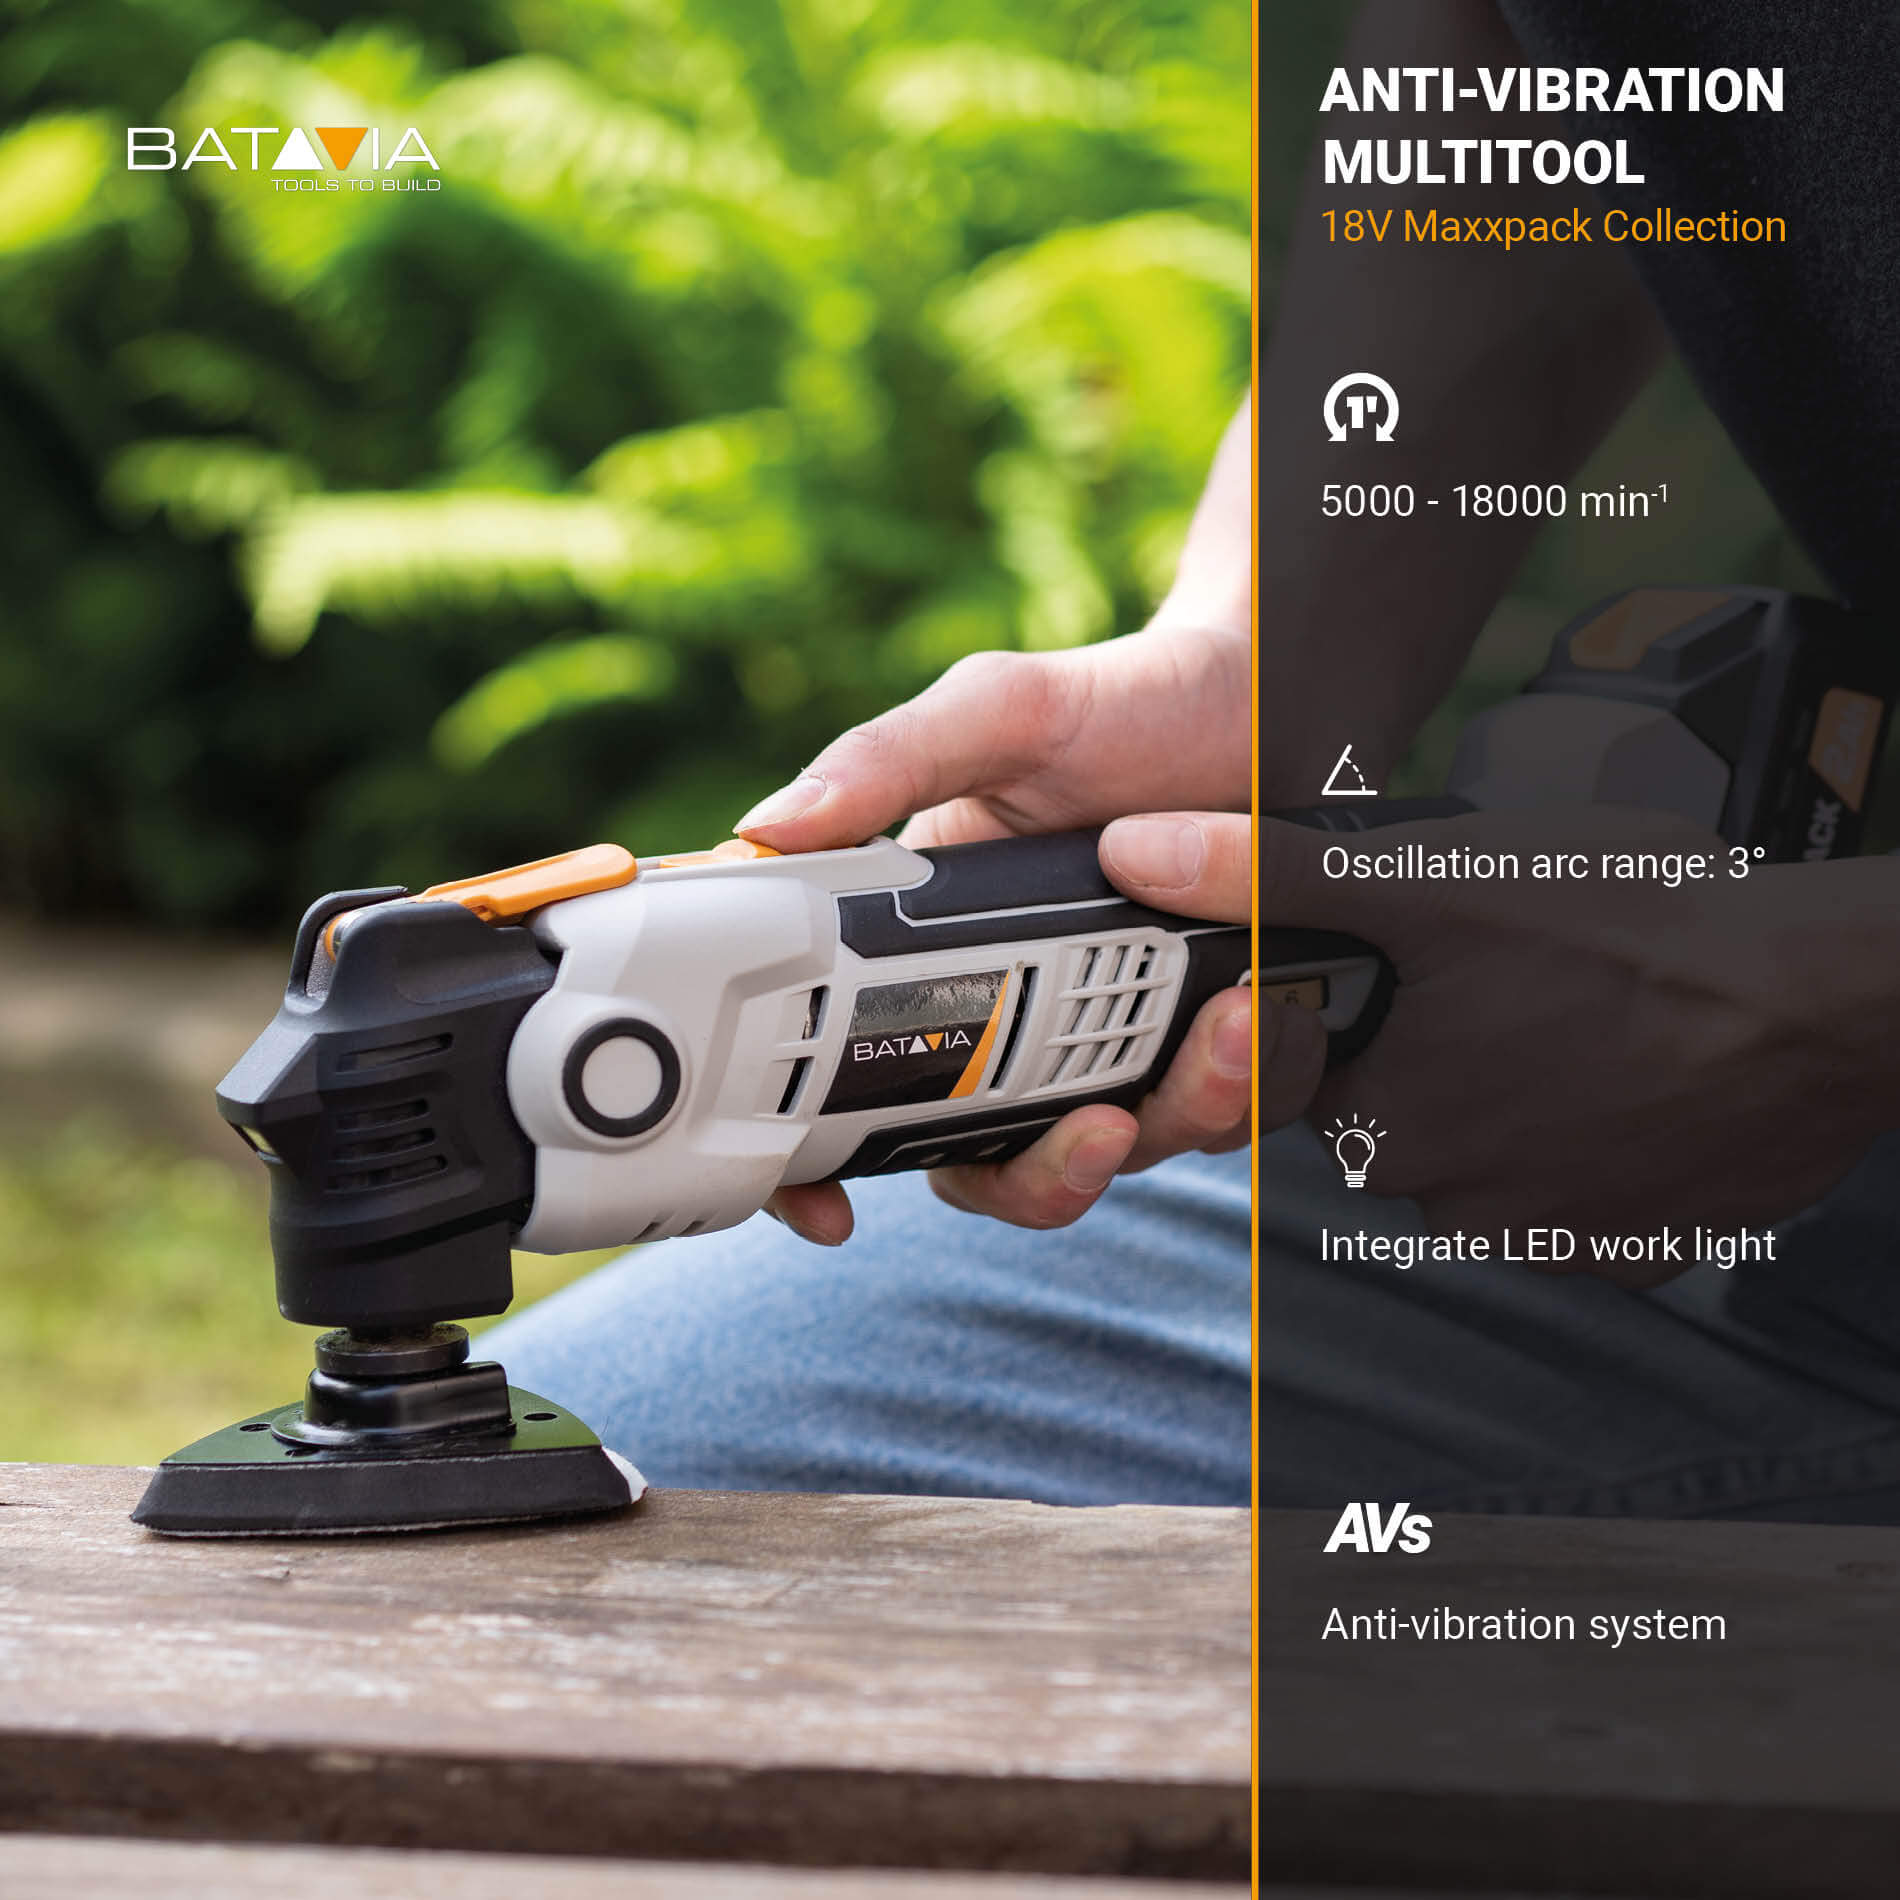 18V Anti-Vibration Multitool | Maxxpack collection | Batavia 